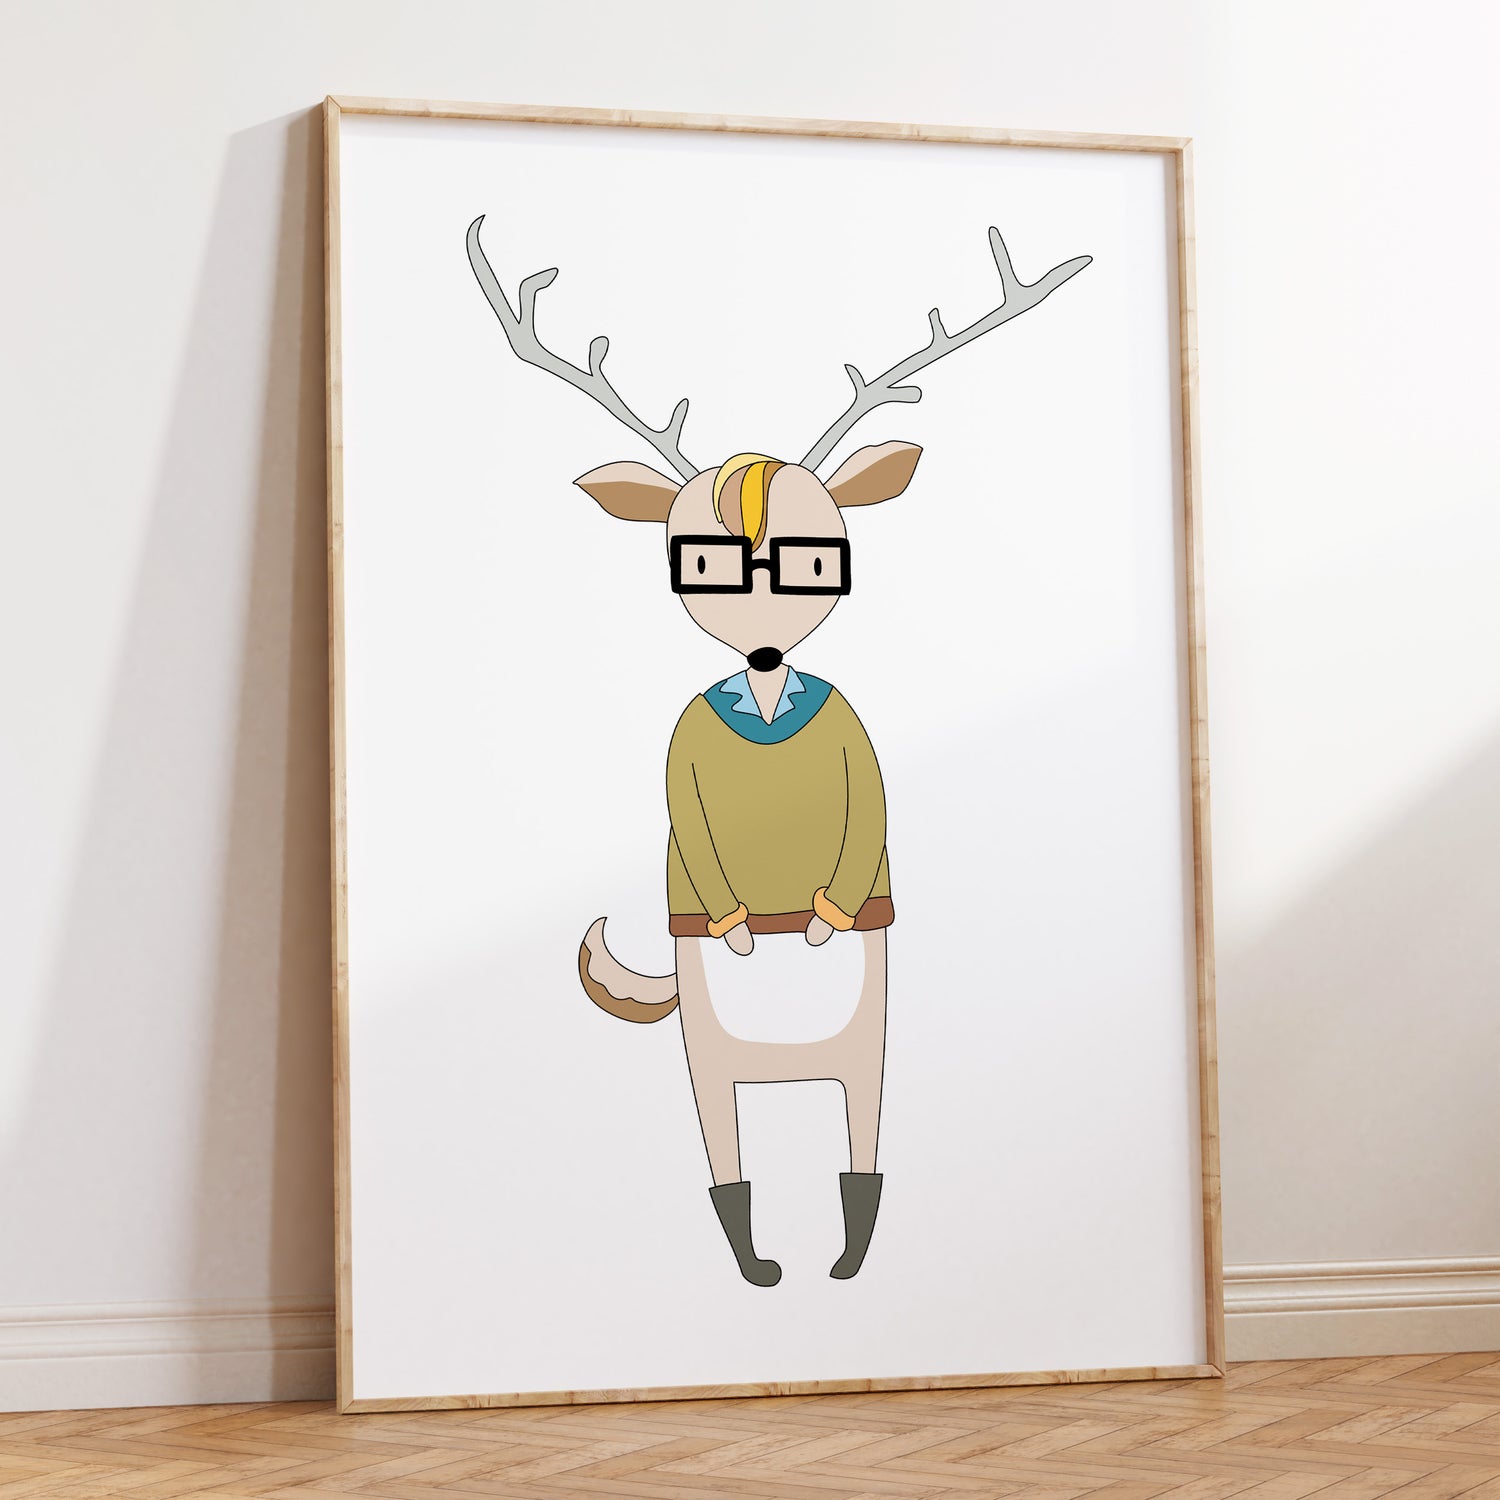 Hipster Deer Print